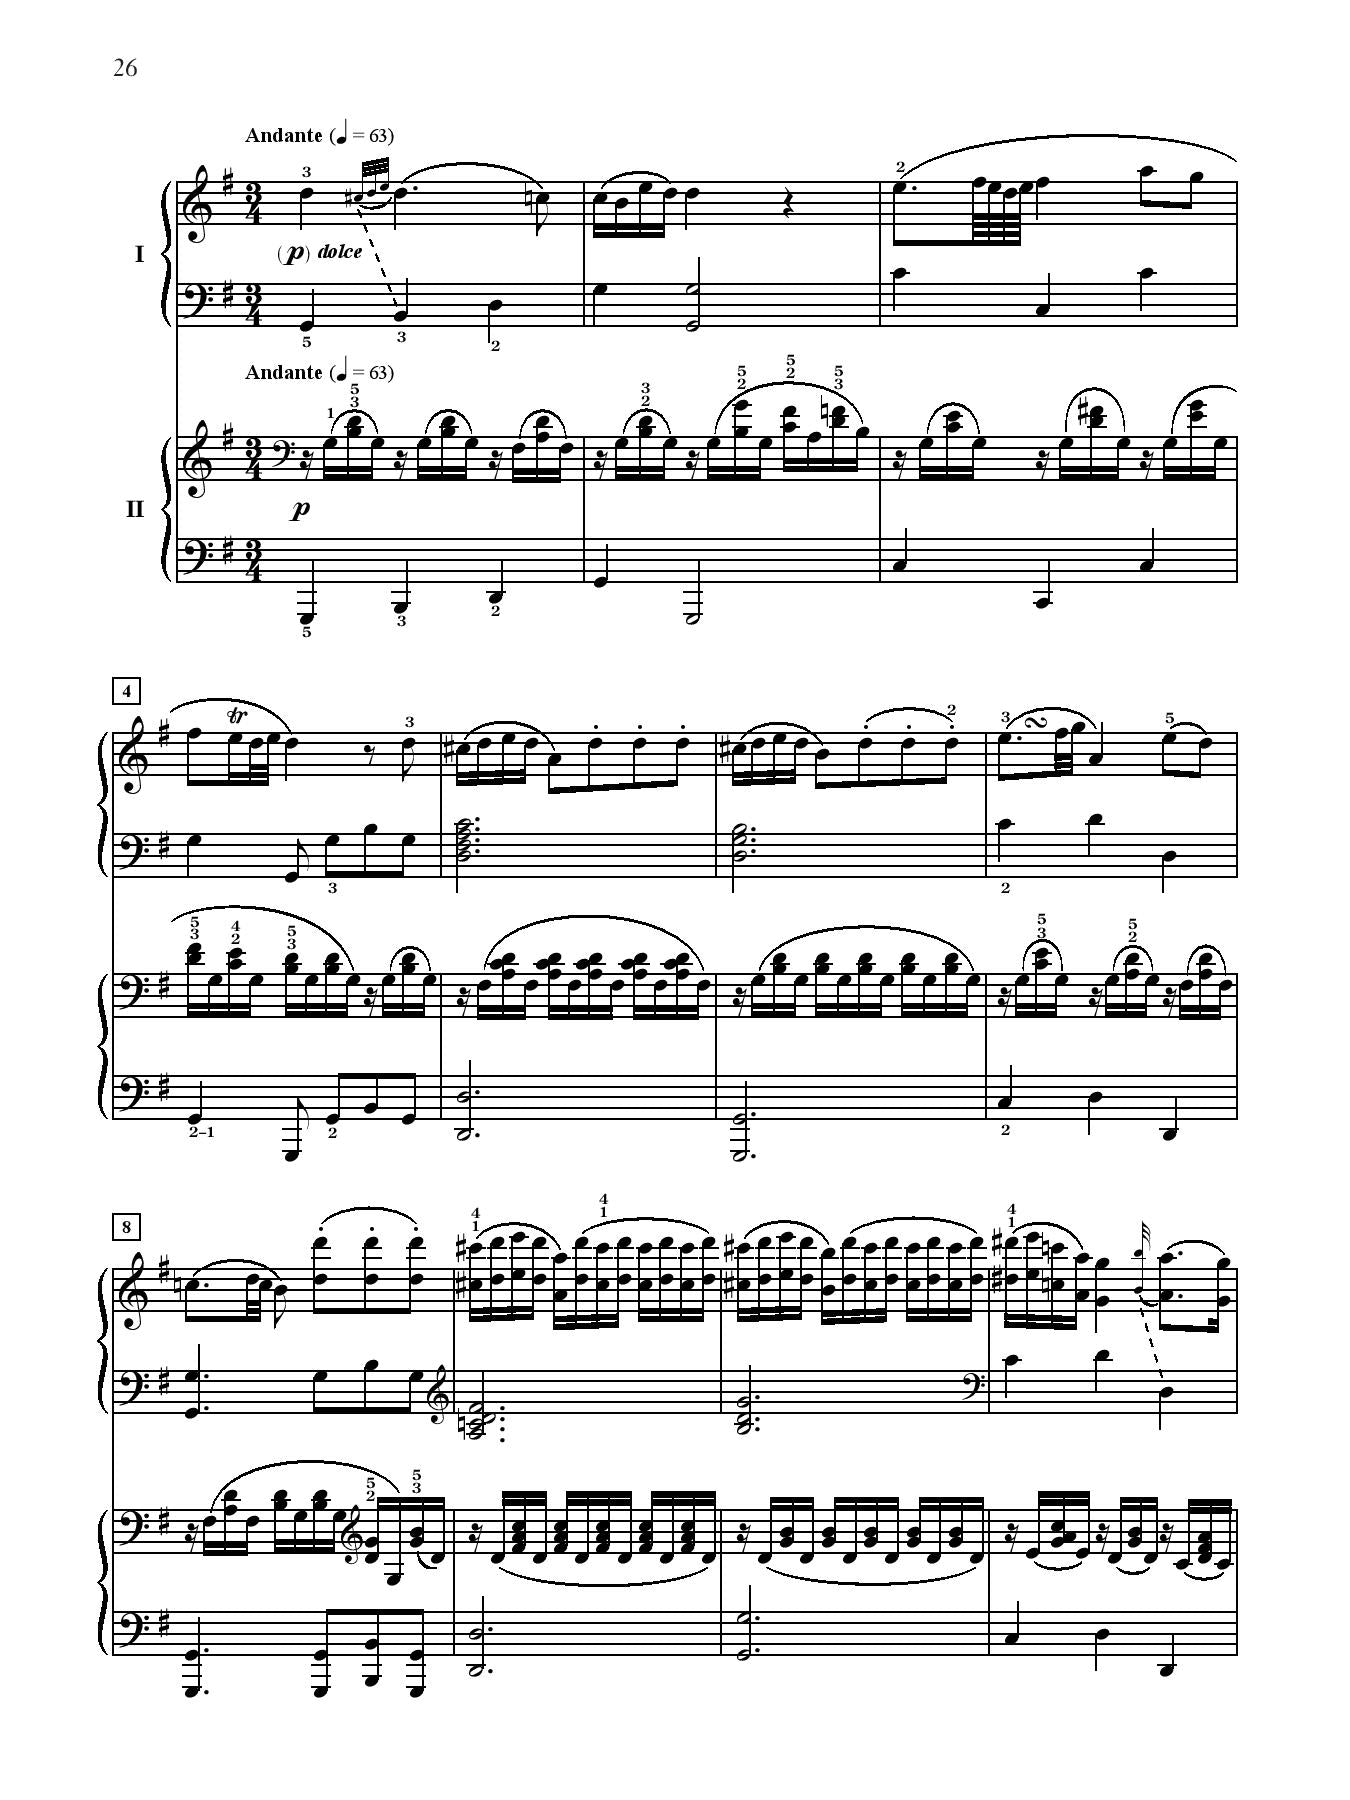 Mozart: Sonata in D Major, K. 448